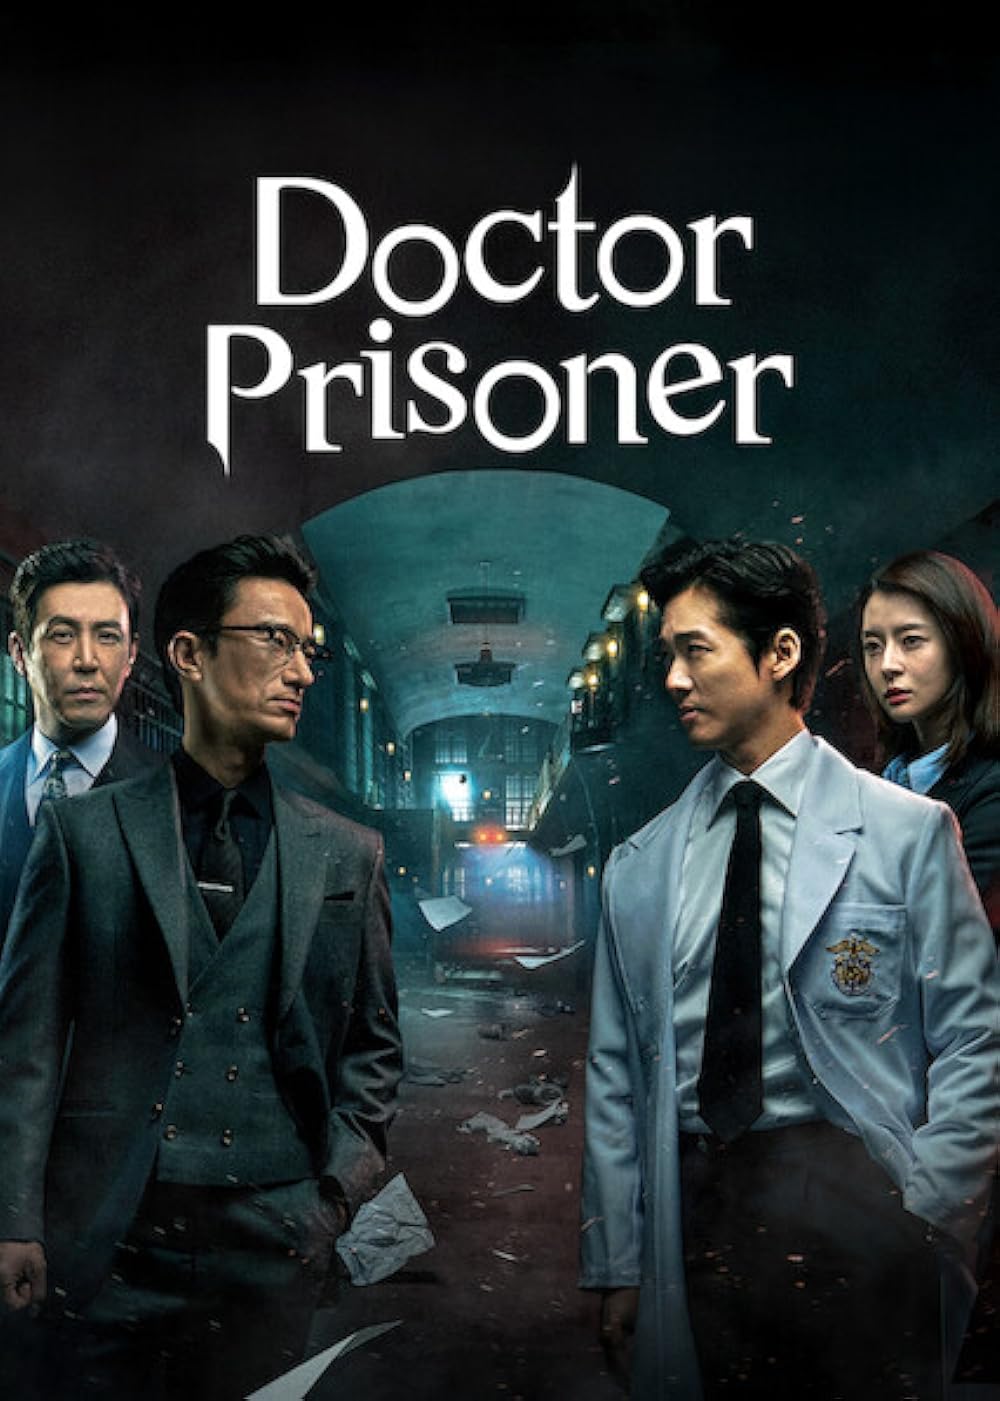 Doctor Prisoner ซีรีย์เกาหลี, ซีรี่ย์แนวสืบสวน เกาหลี